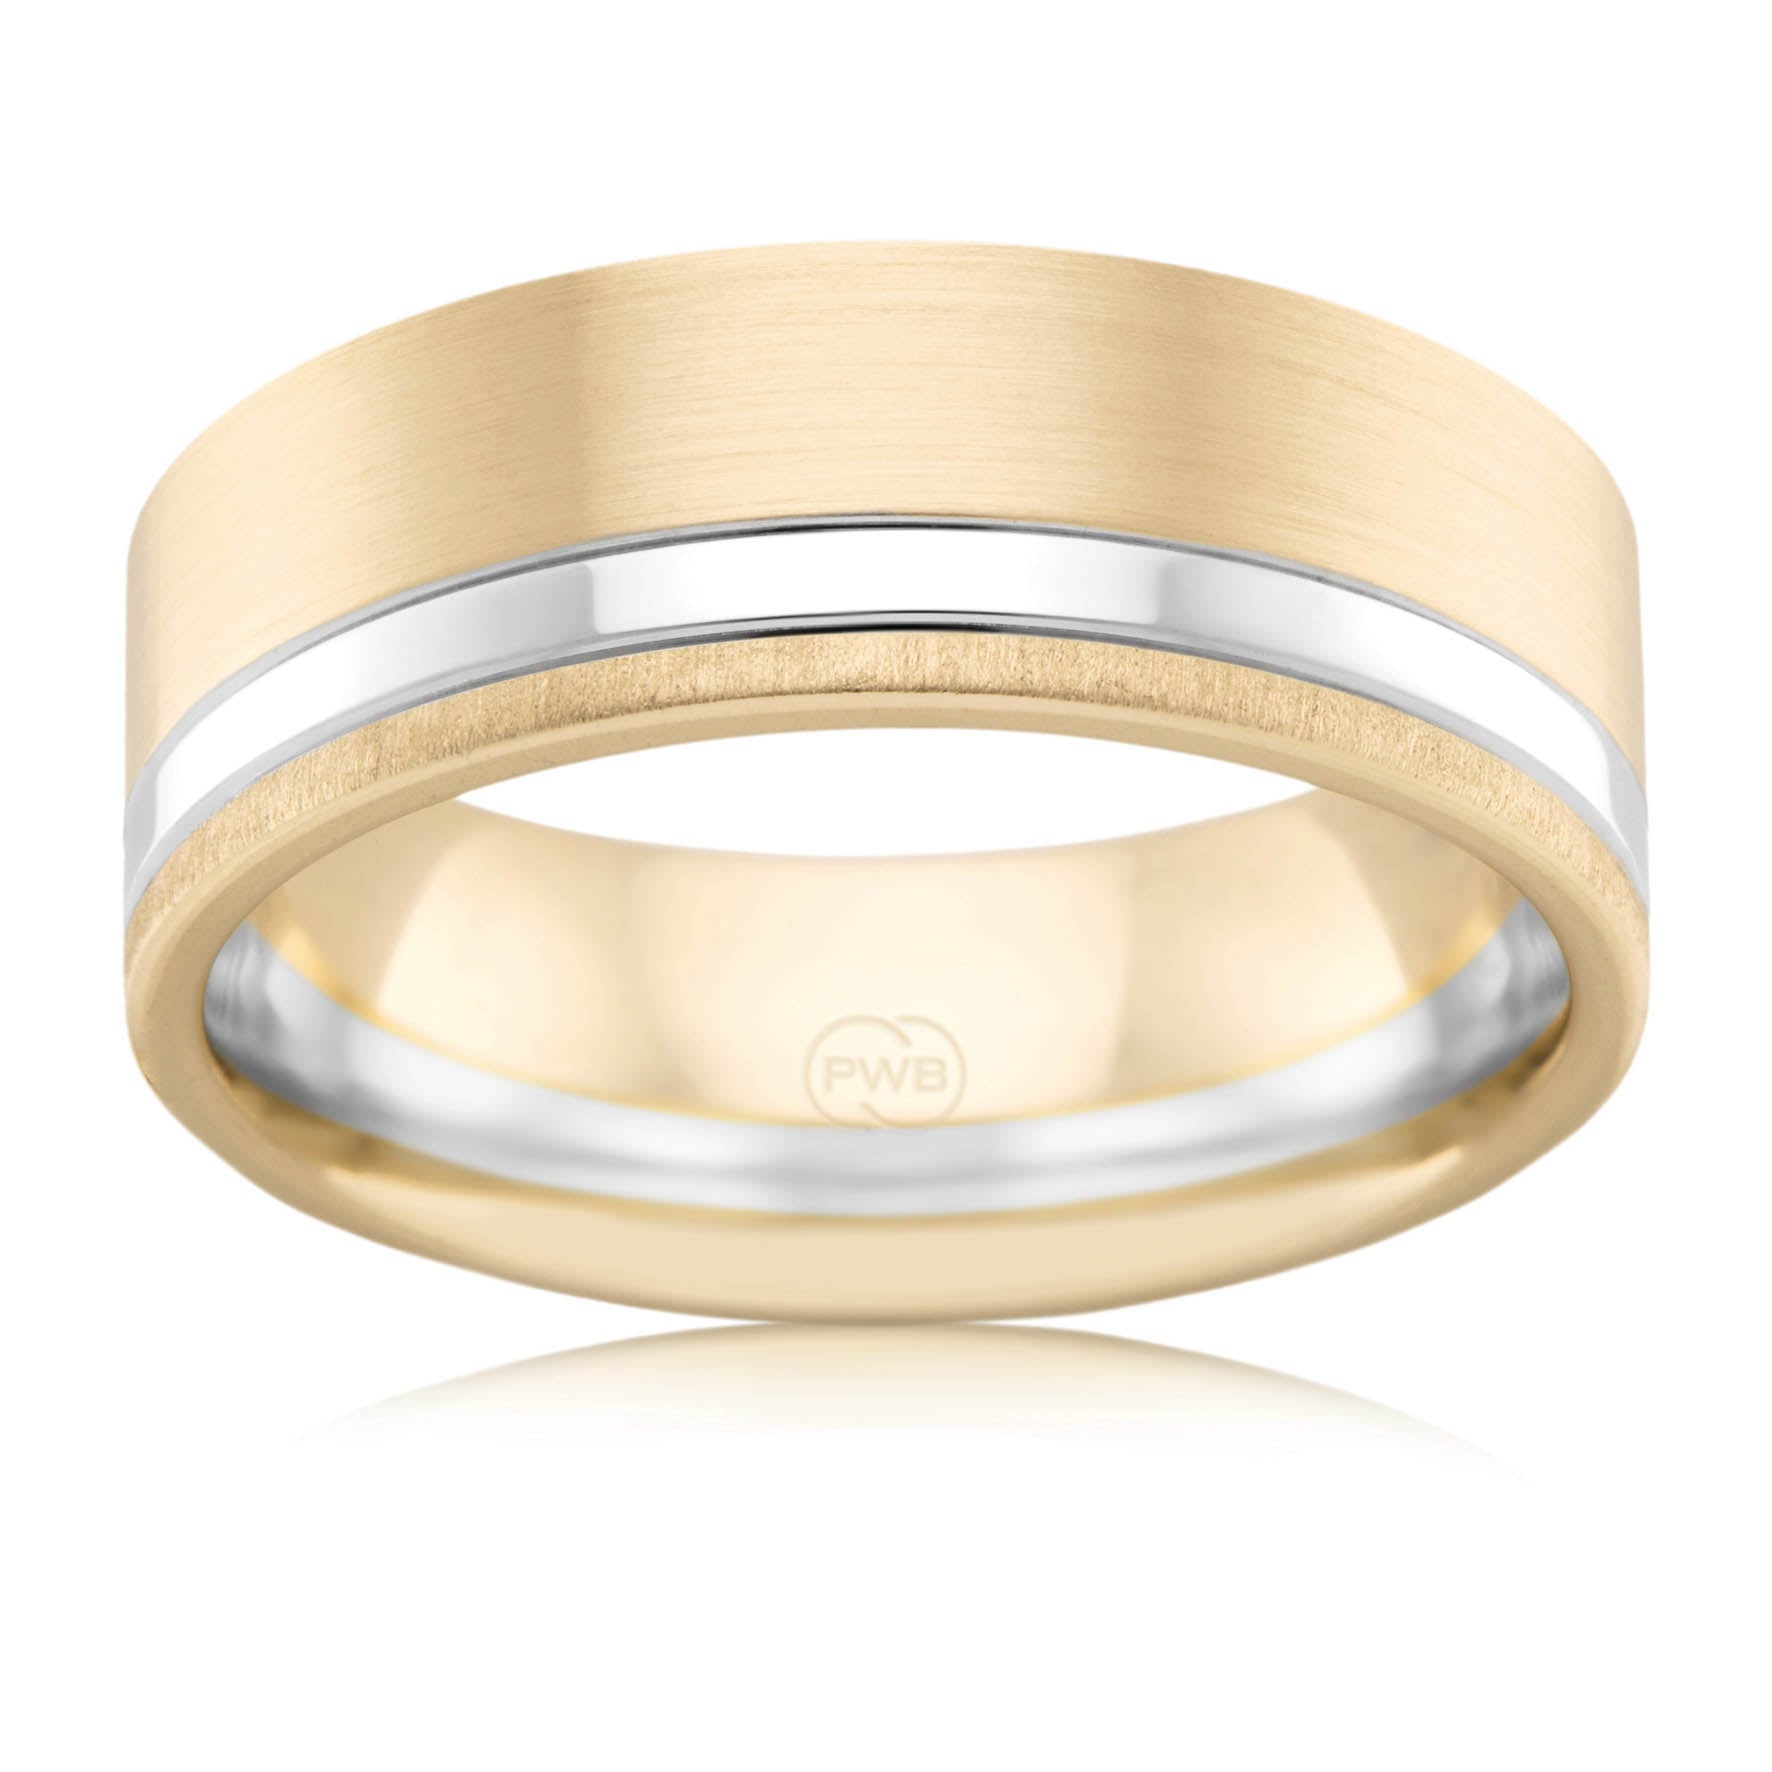 Two-Tone Gents Flat-Profile Wedding Ring.